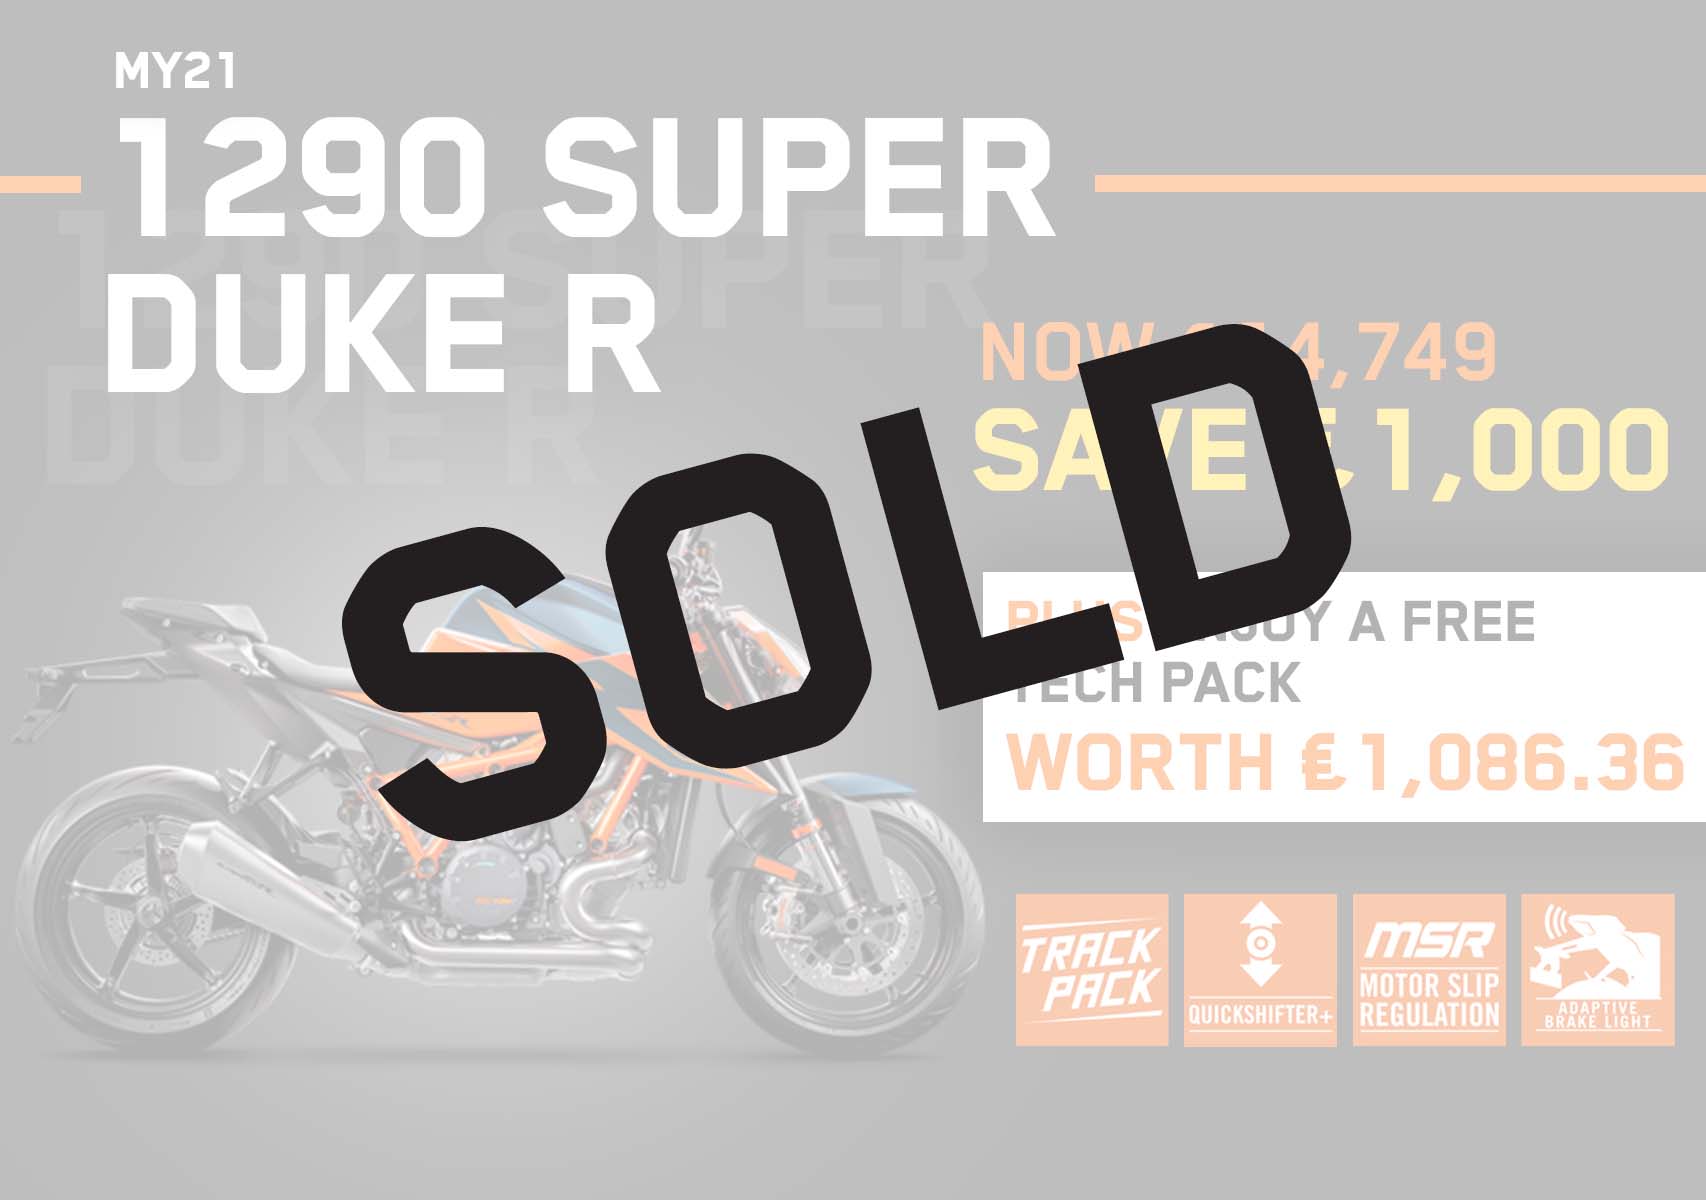 Laguna exclusive offer available on KTM 1290 Super Duke R